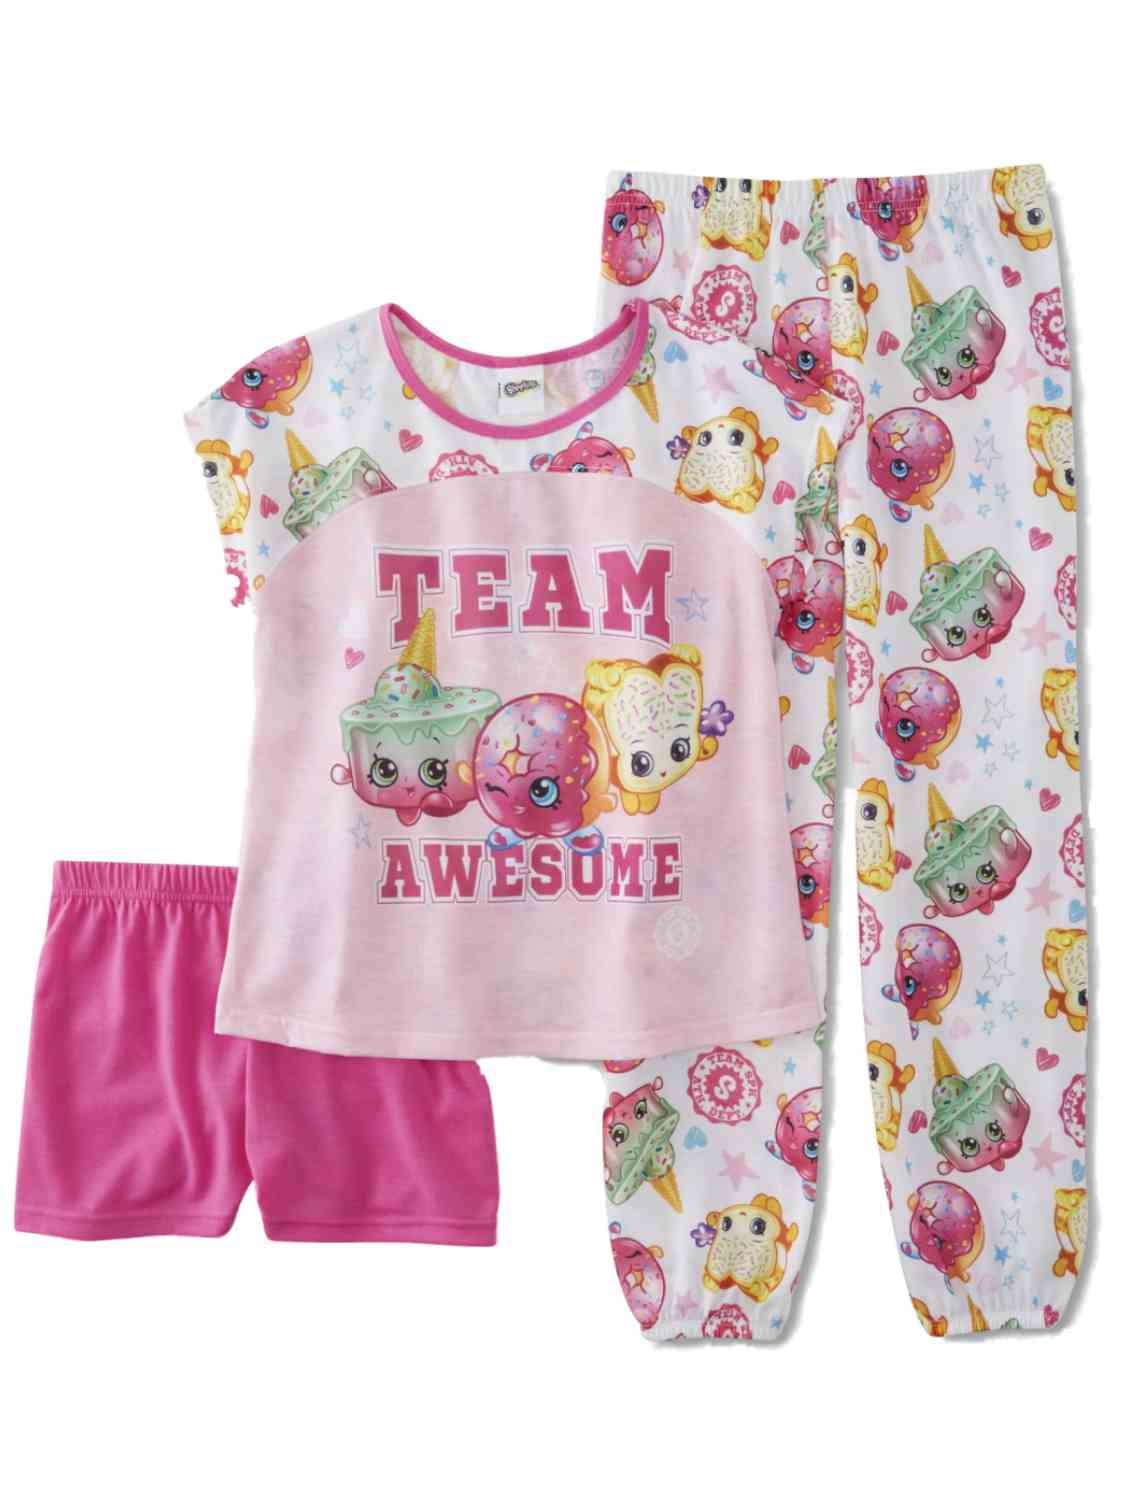 Shopkins Shortie Pyjamas Girls Sleepwear Casual Nightwear  Ages  3 to 10 years